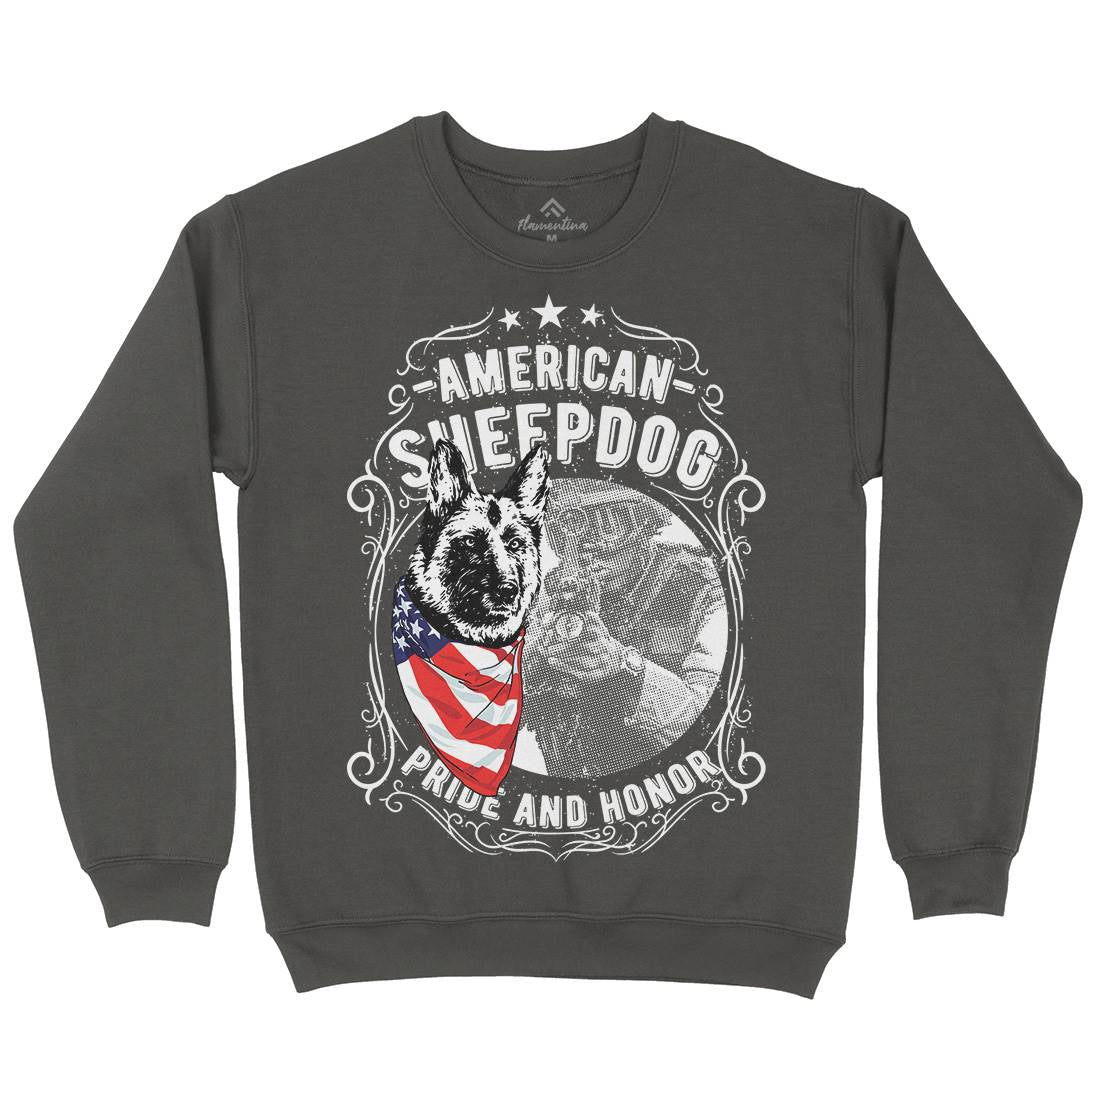 Sheepdog Kids Crew Neck Sweatshirt American C904